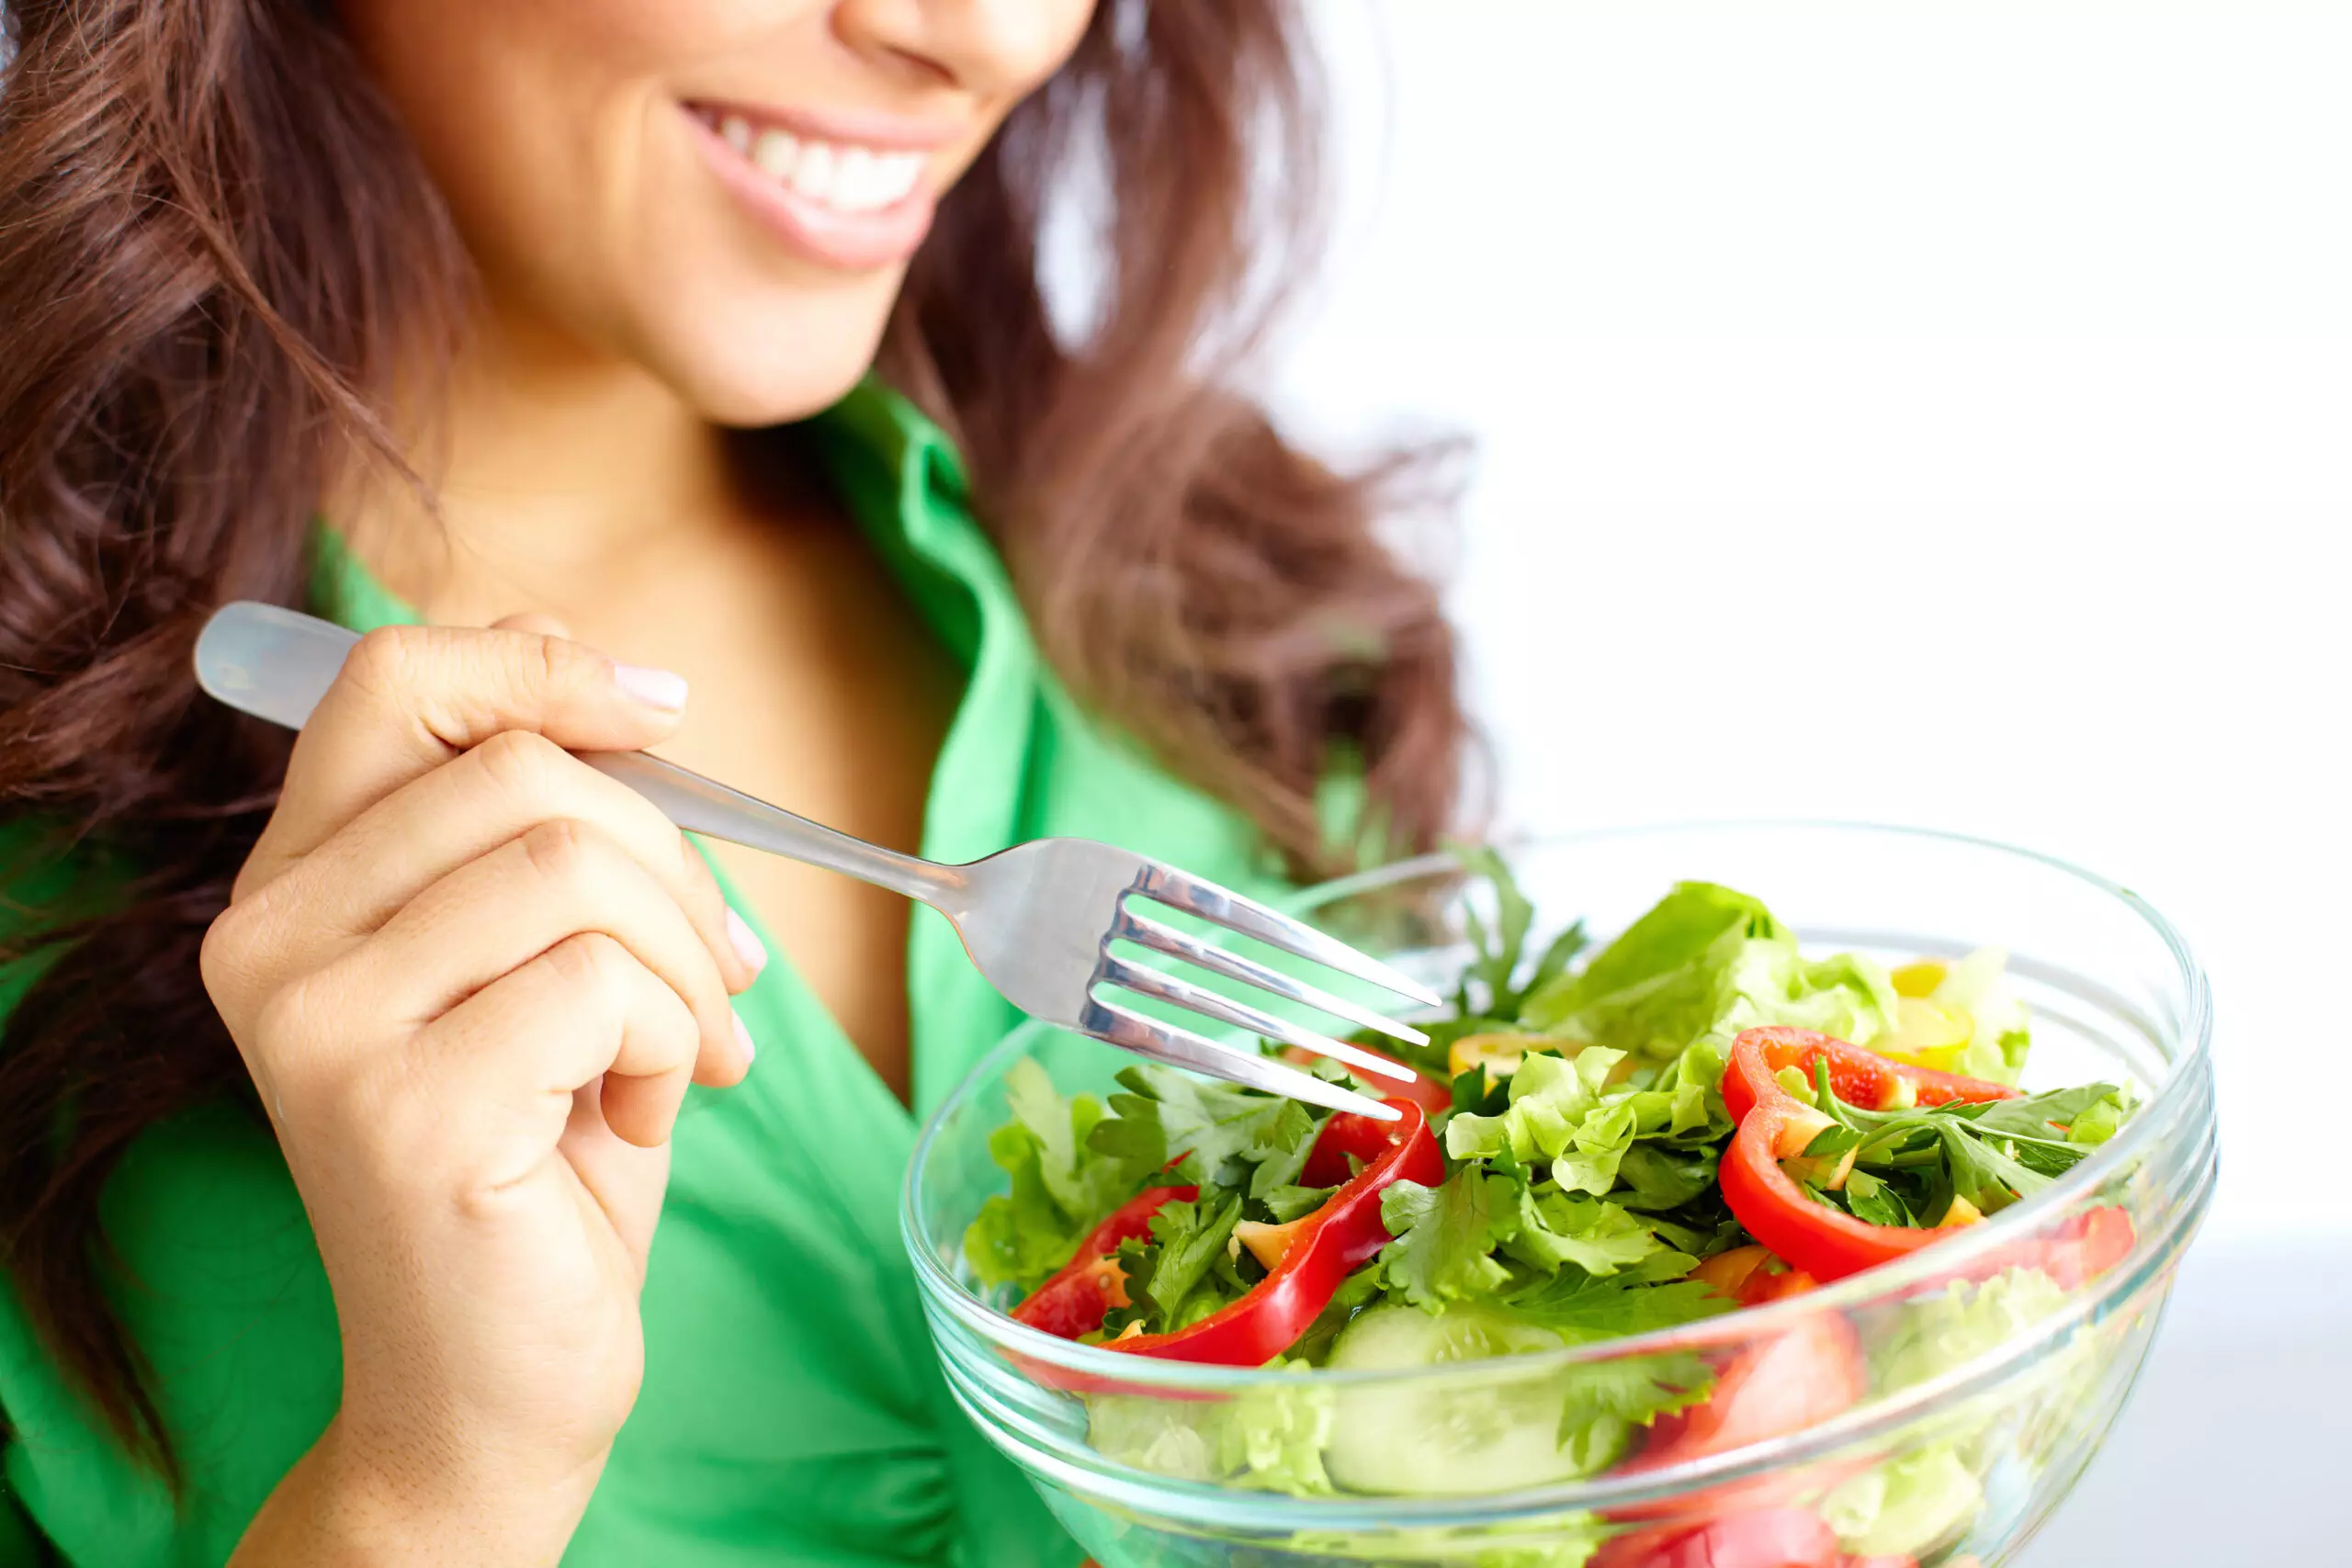 Woman smiling, eating fresh vegetable salad.